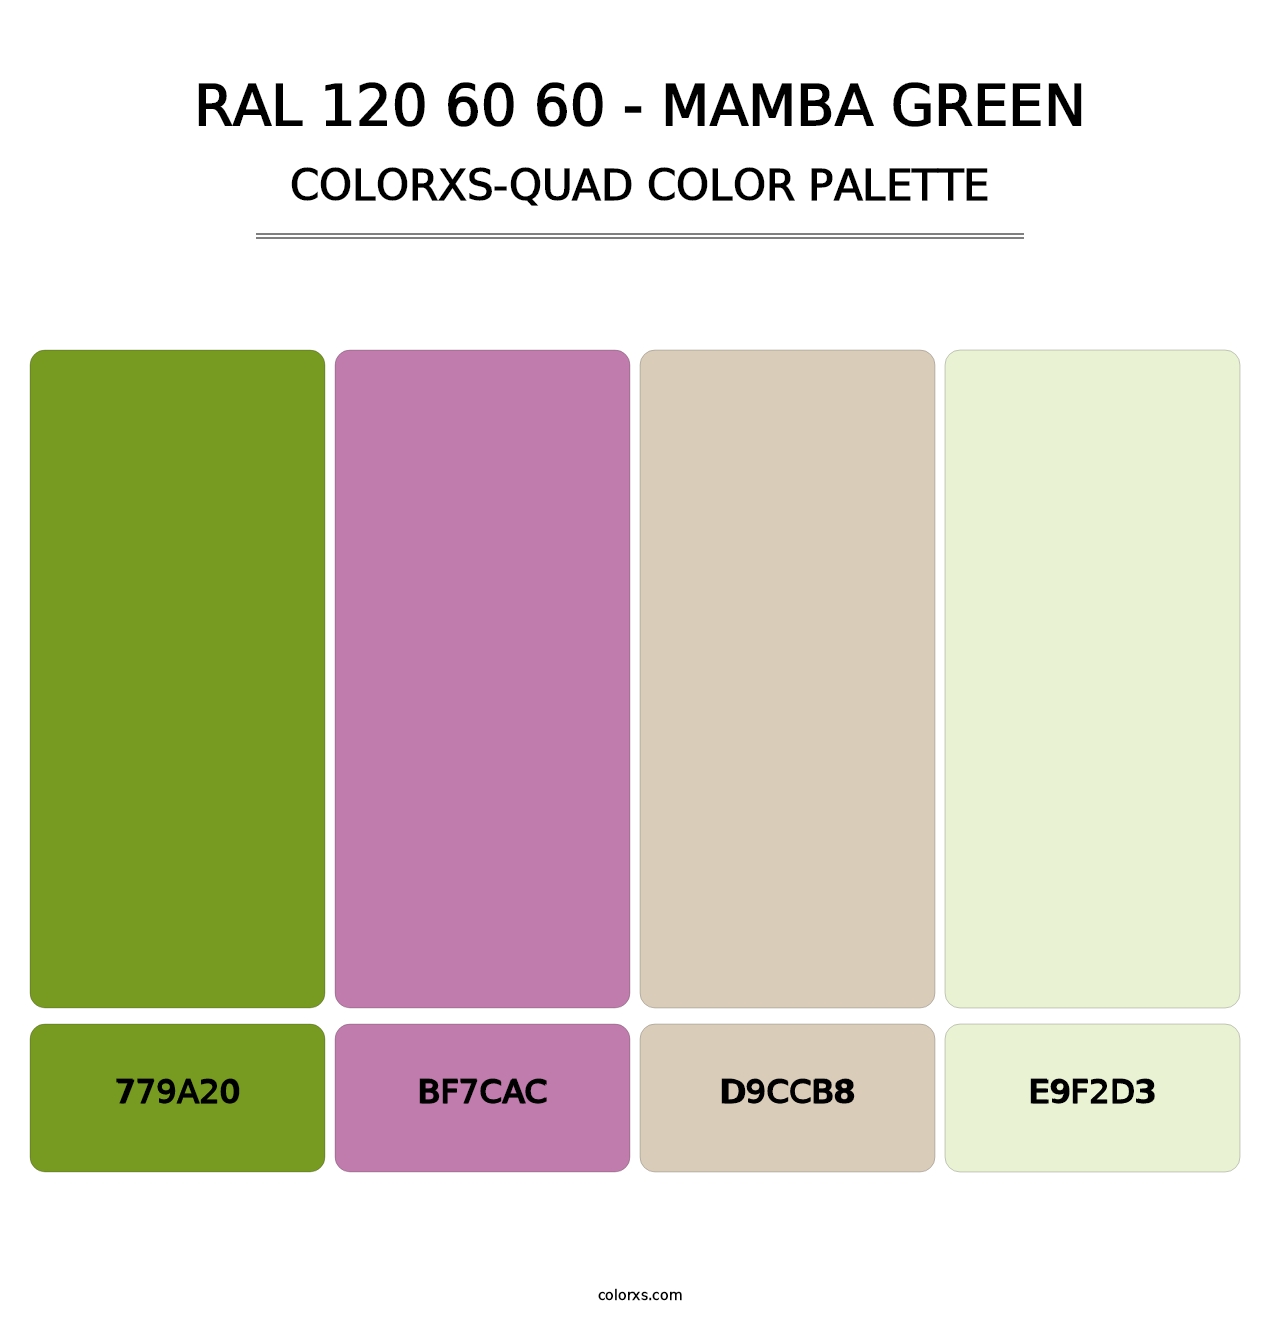 RAL 120 60 60 - Mamba Green - Colorxs Quad Palette